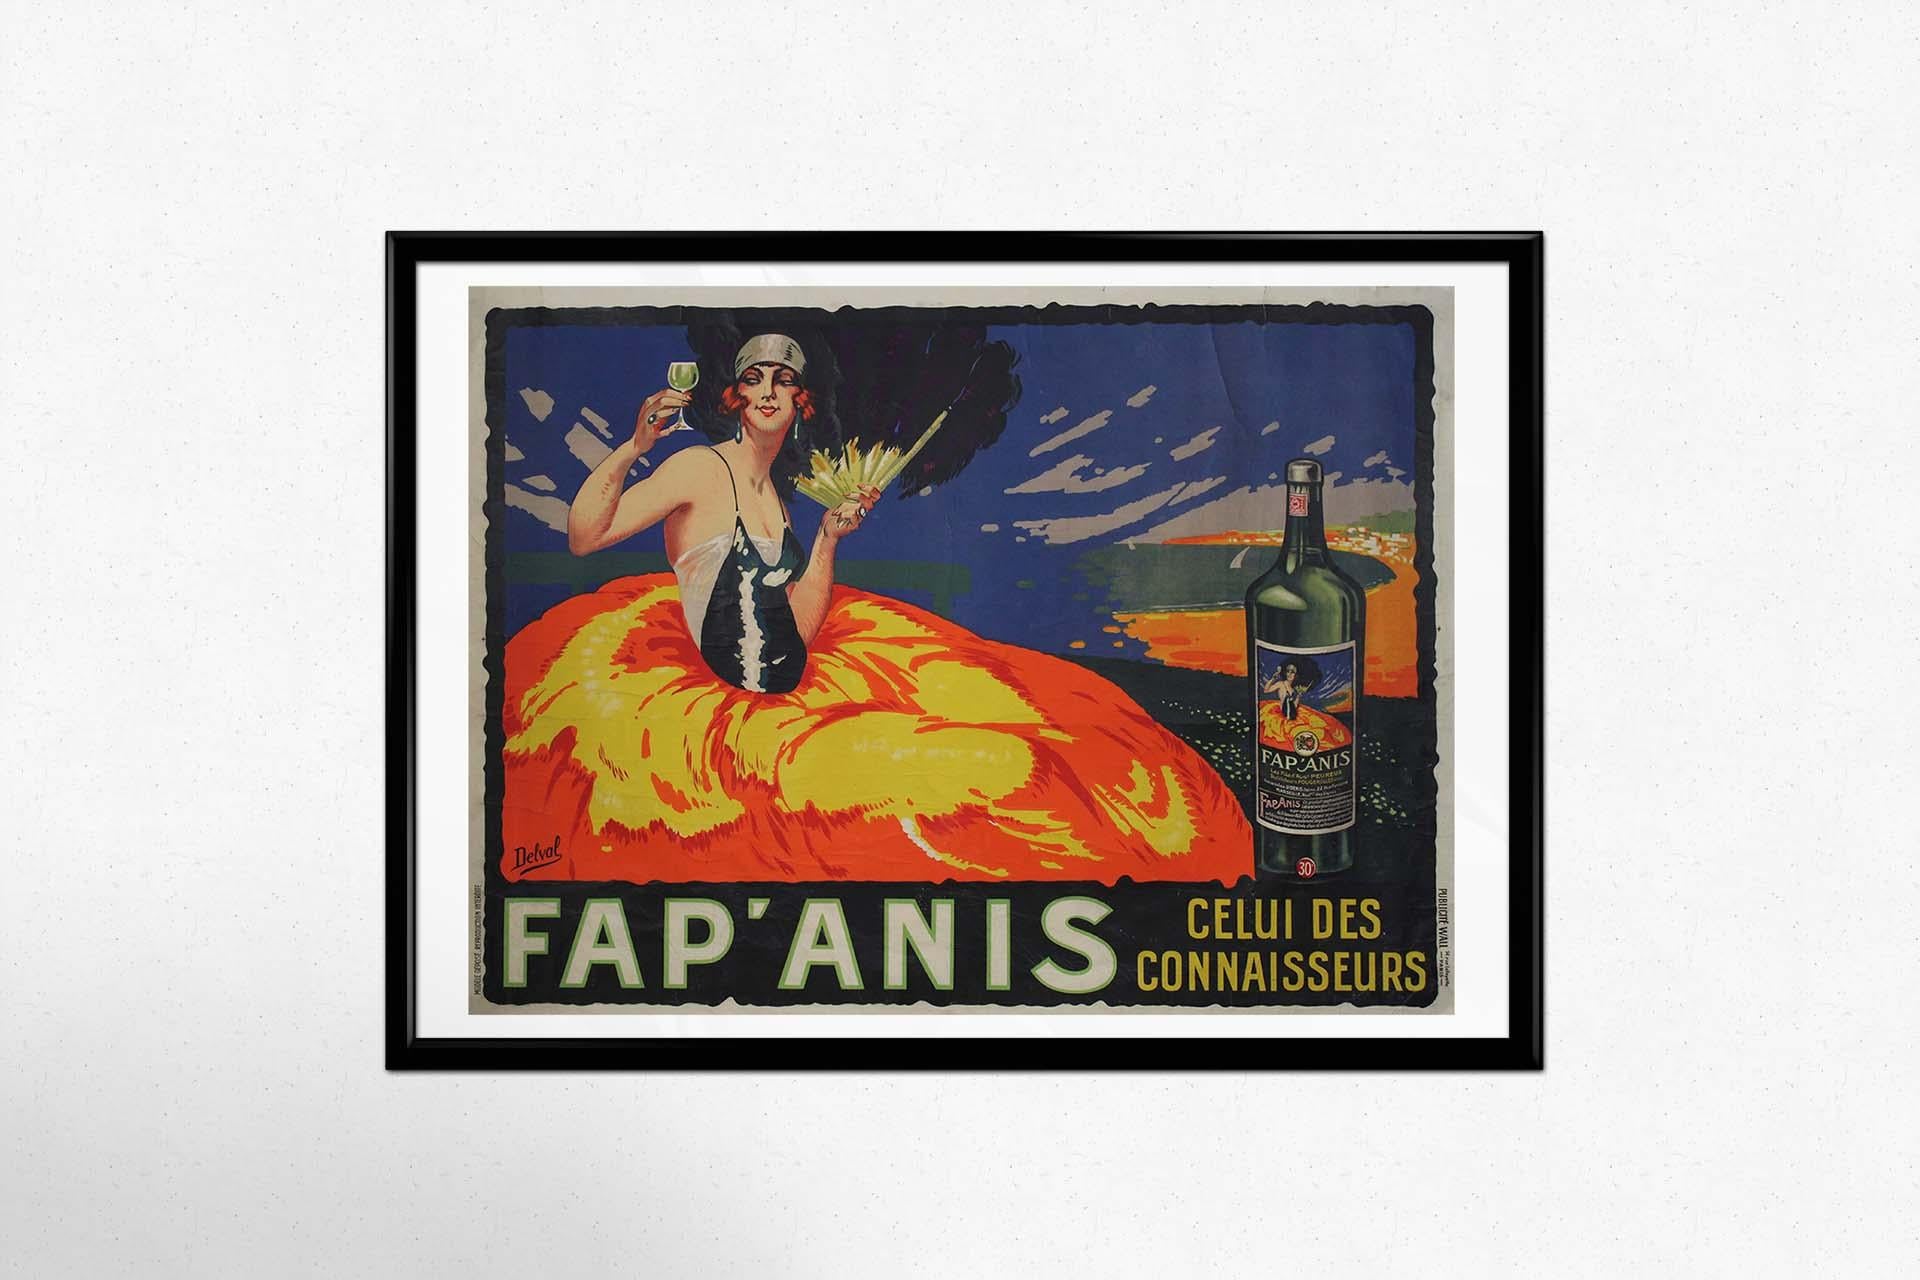 Originalplakat von Delval für Fap'anis alcohol celui des Connaisseurs im Angebot 1